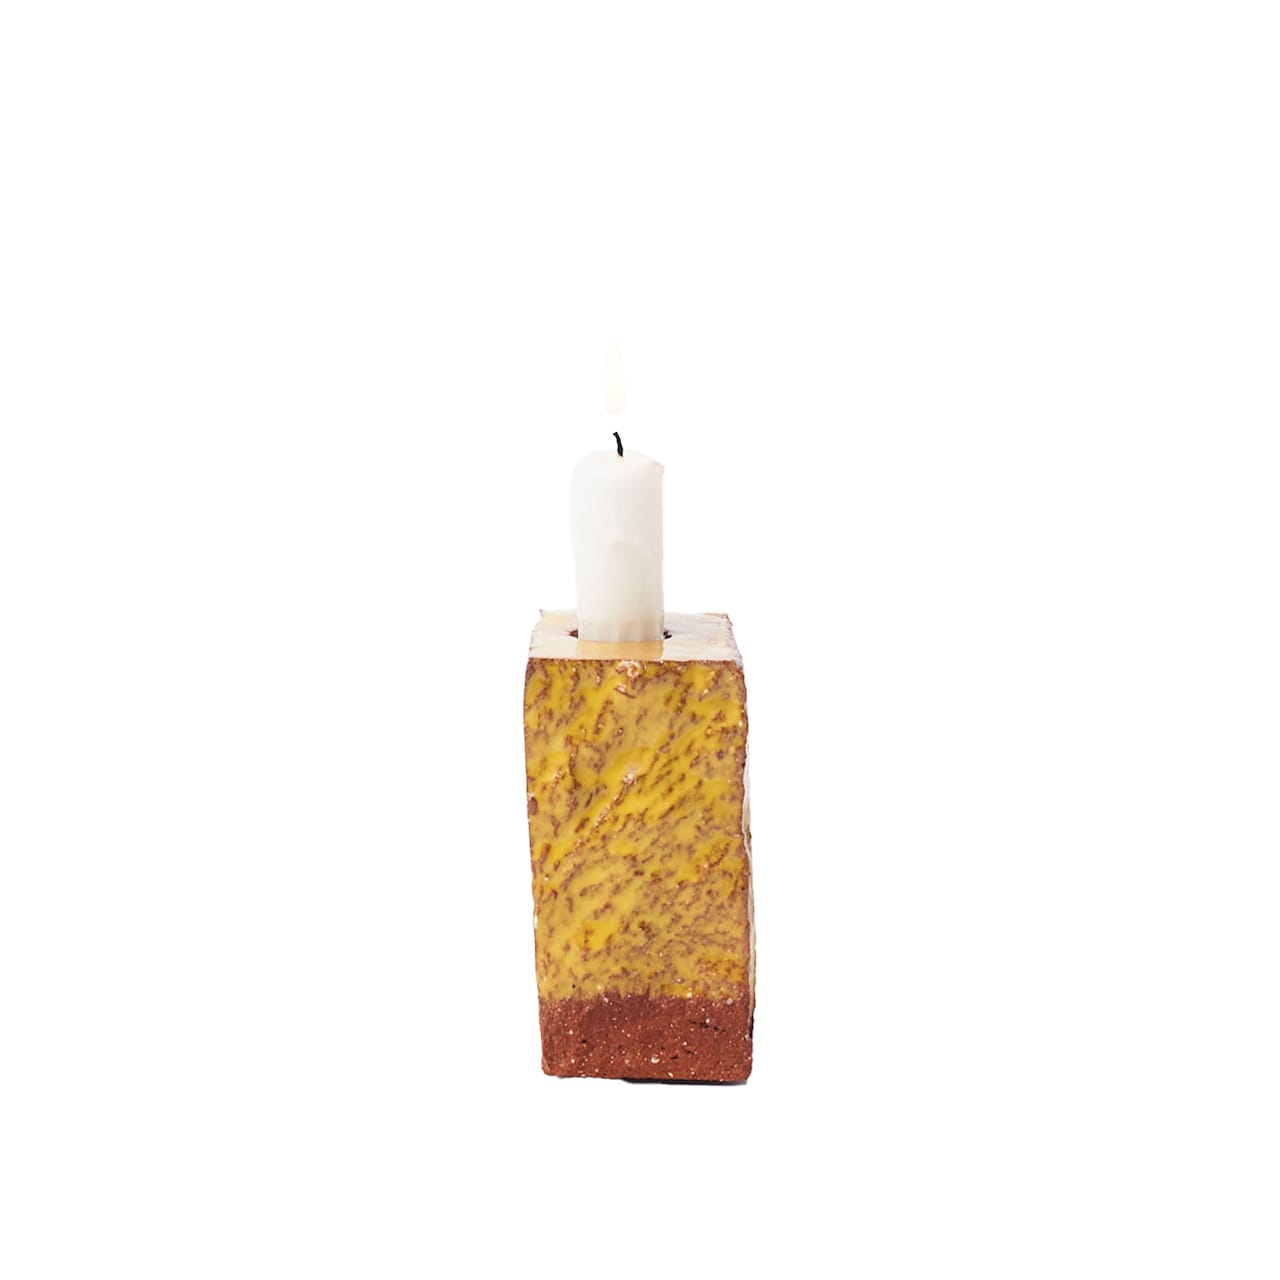 A Single Brick Candle